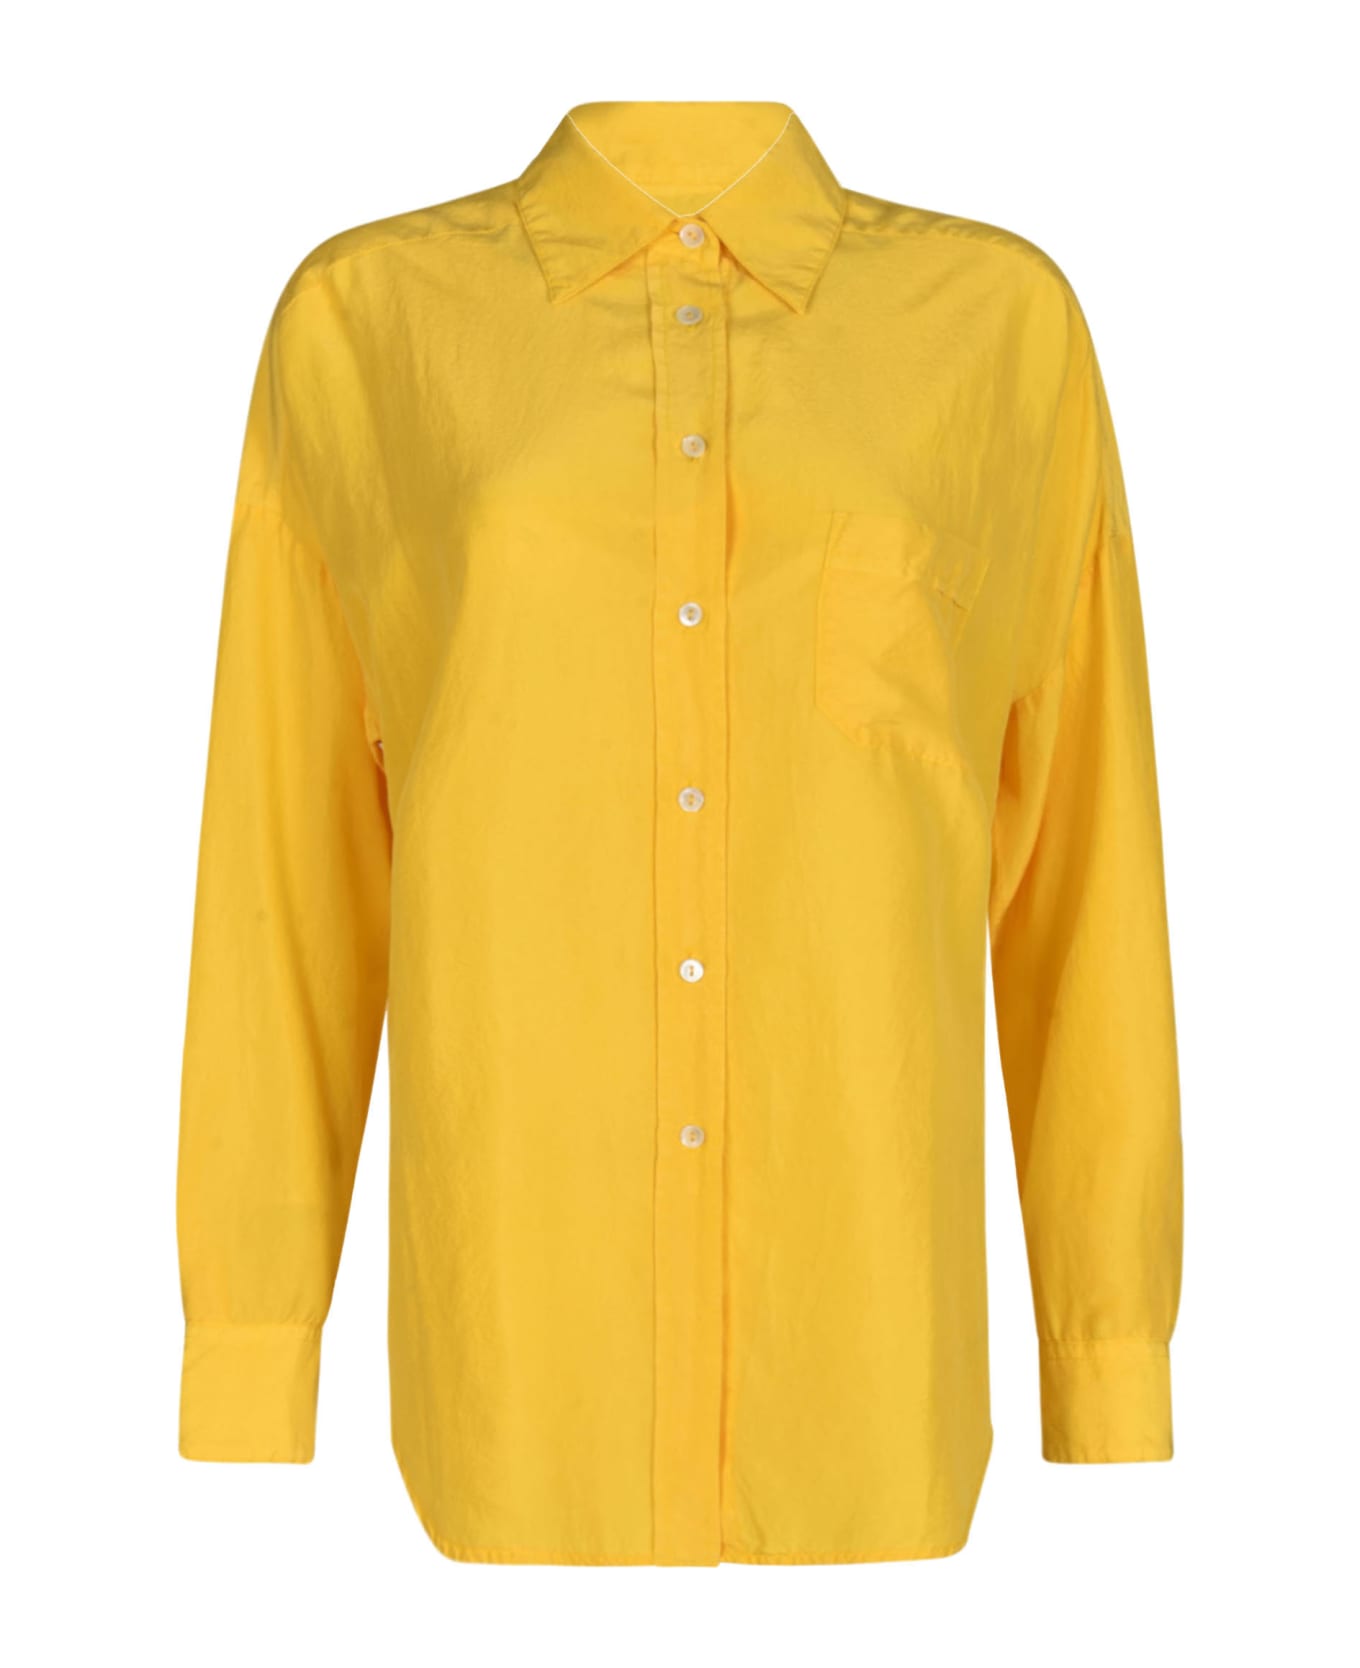 Alberto Biani Oversized Plain Shirt - Yellow